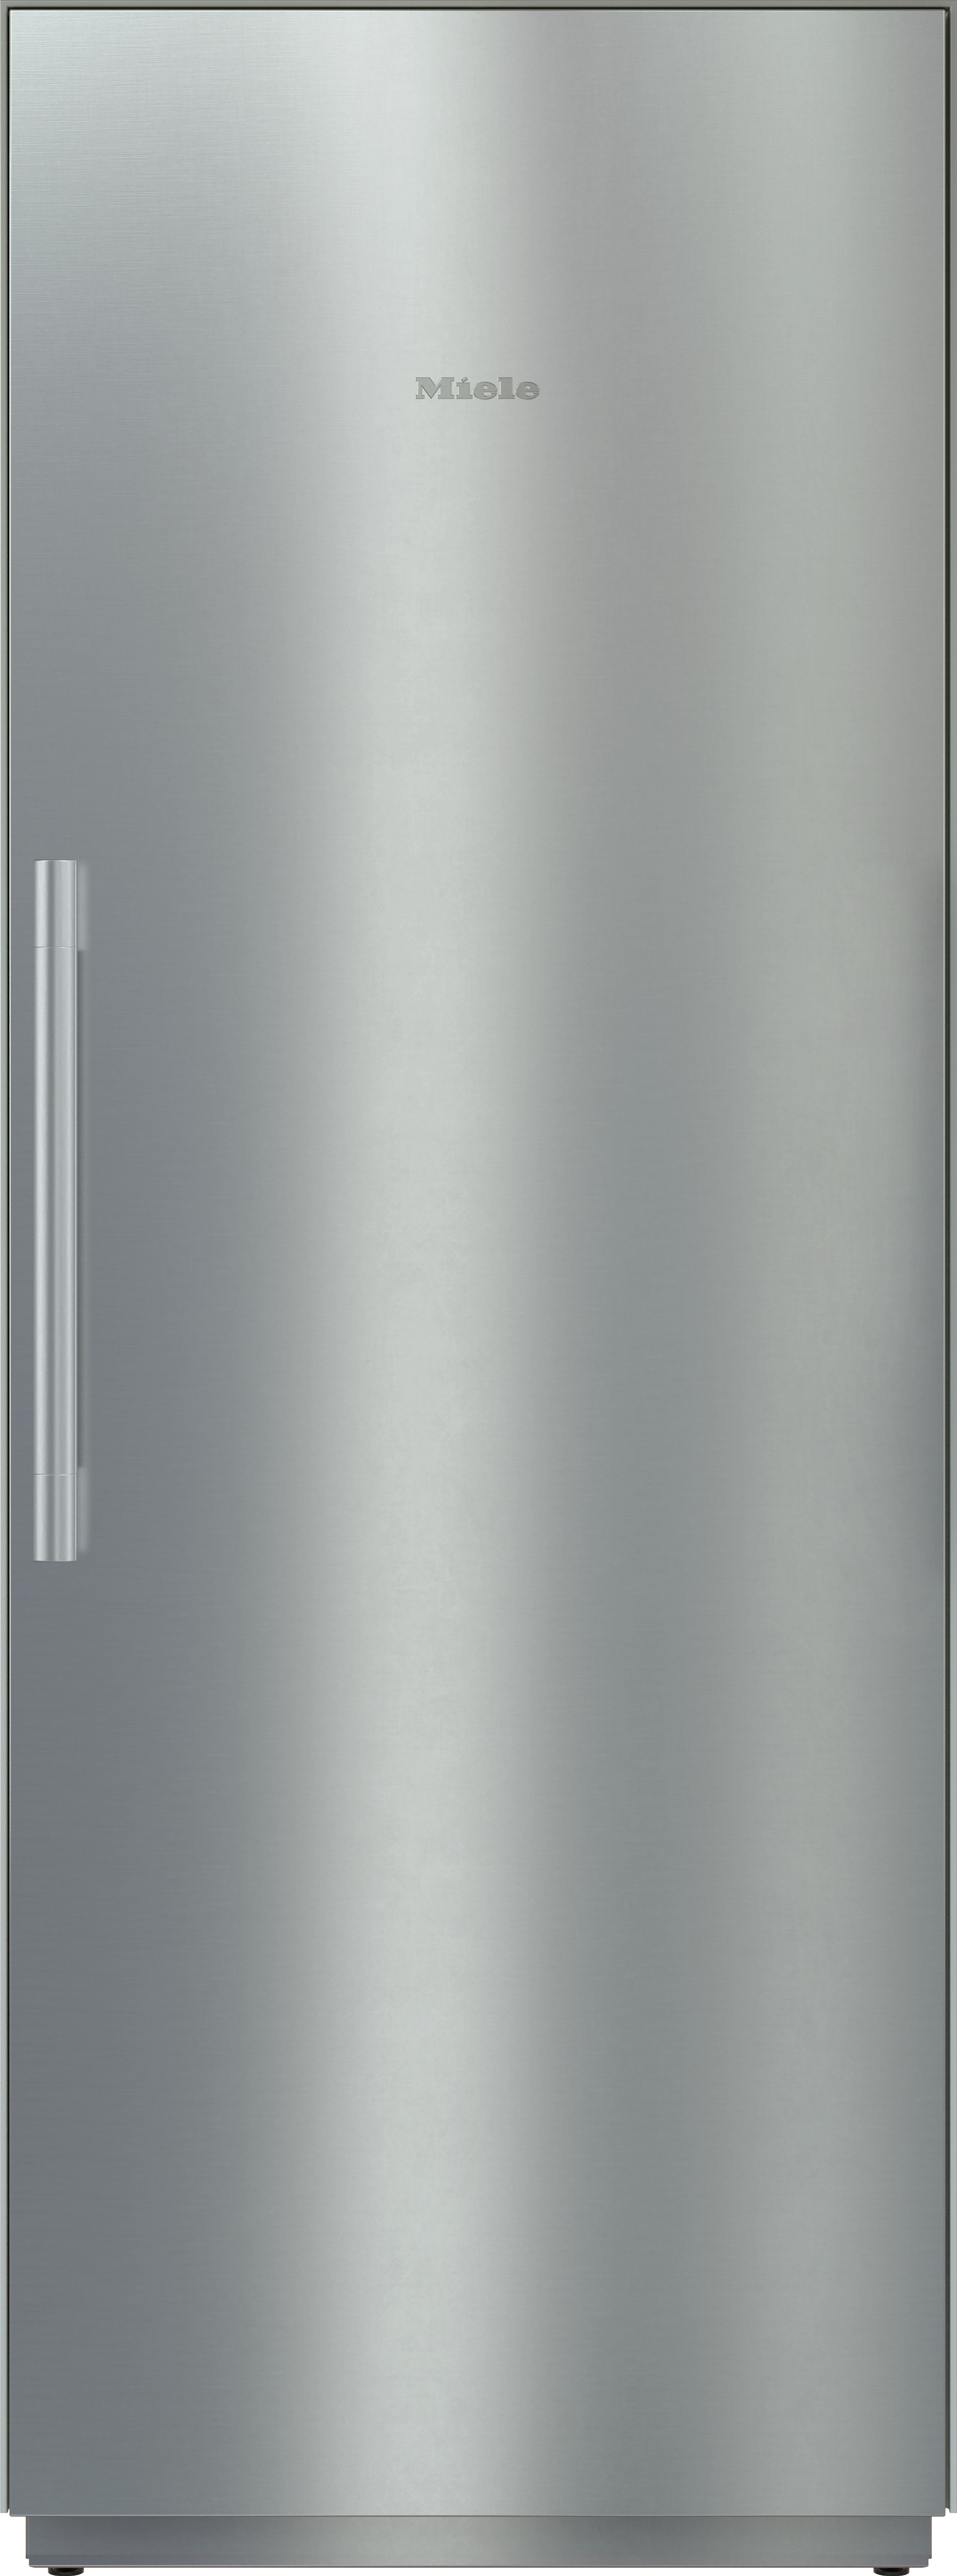 Miele 30 Inch MasterCool 30 Built In Counter Depth Column Refrigerator K2802SF